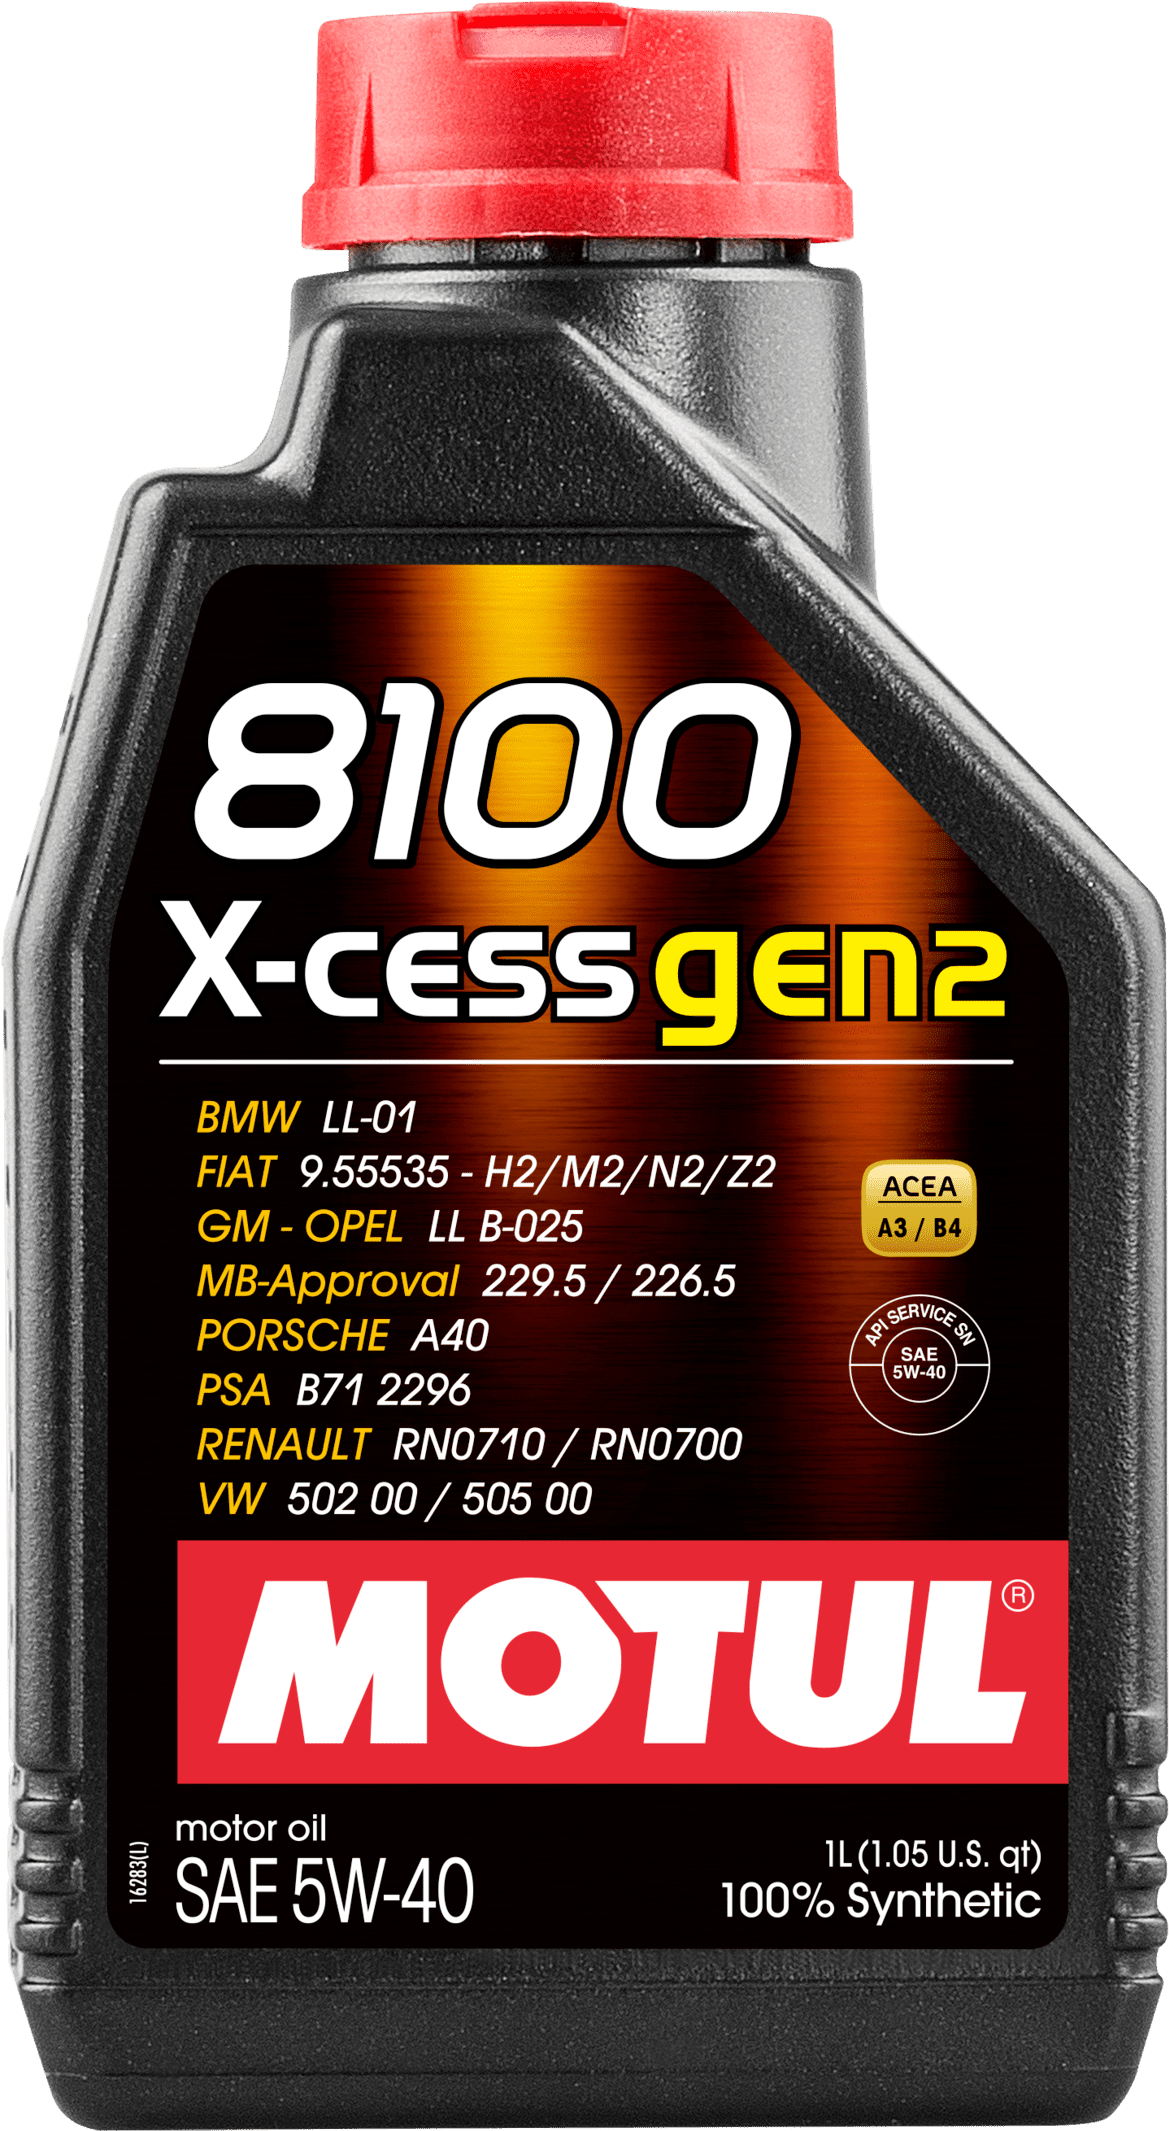 Motul 8100 X-cess gen2 5W-40, 1 lt